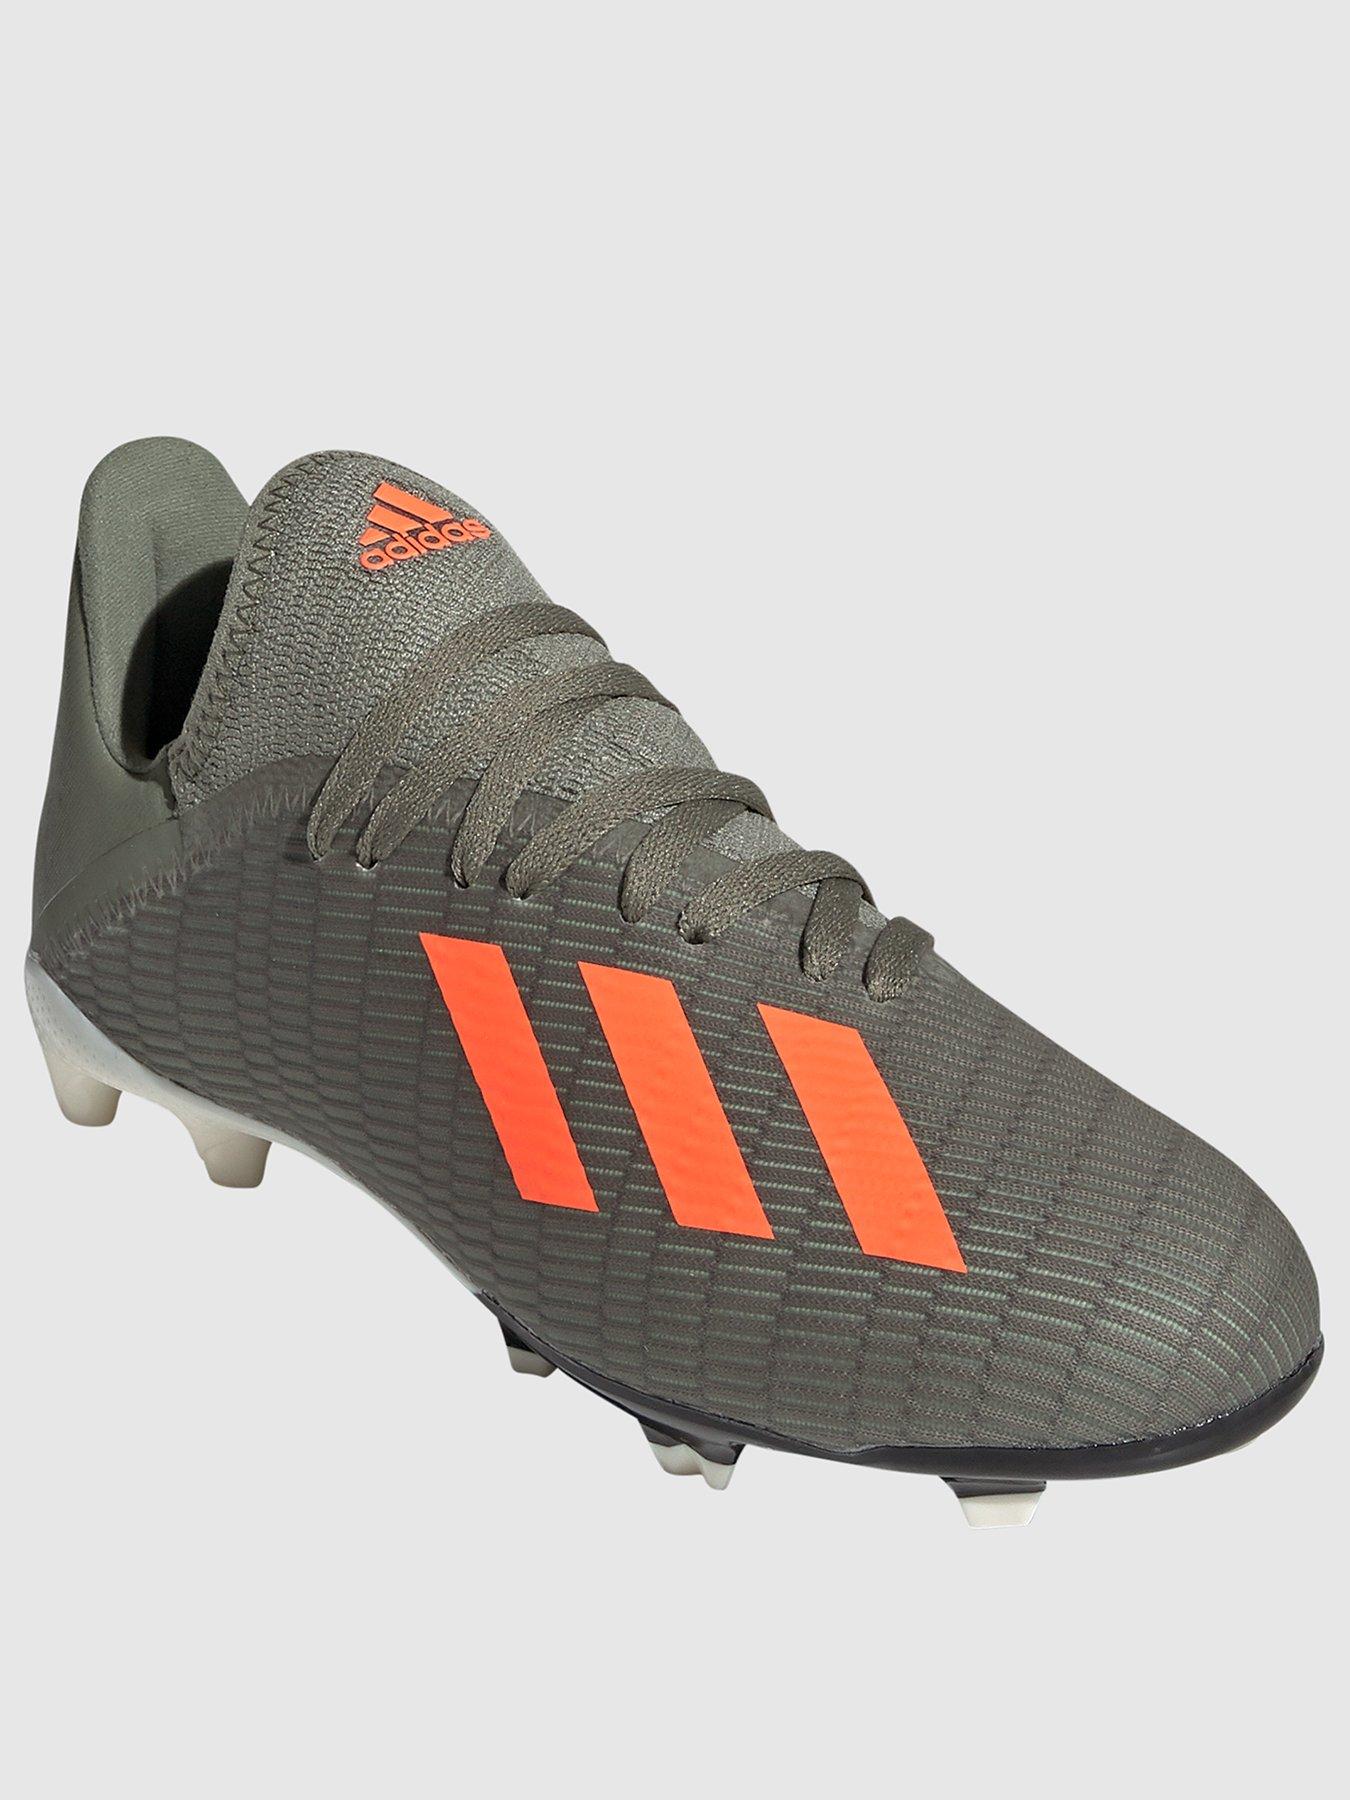 football boots sale uk